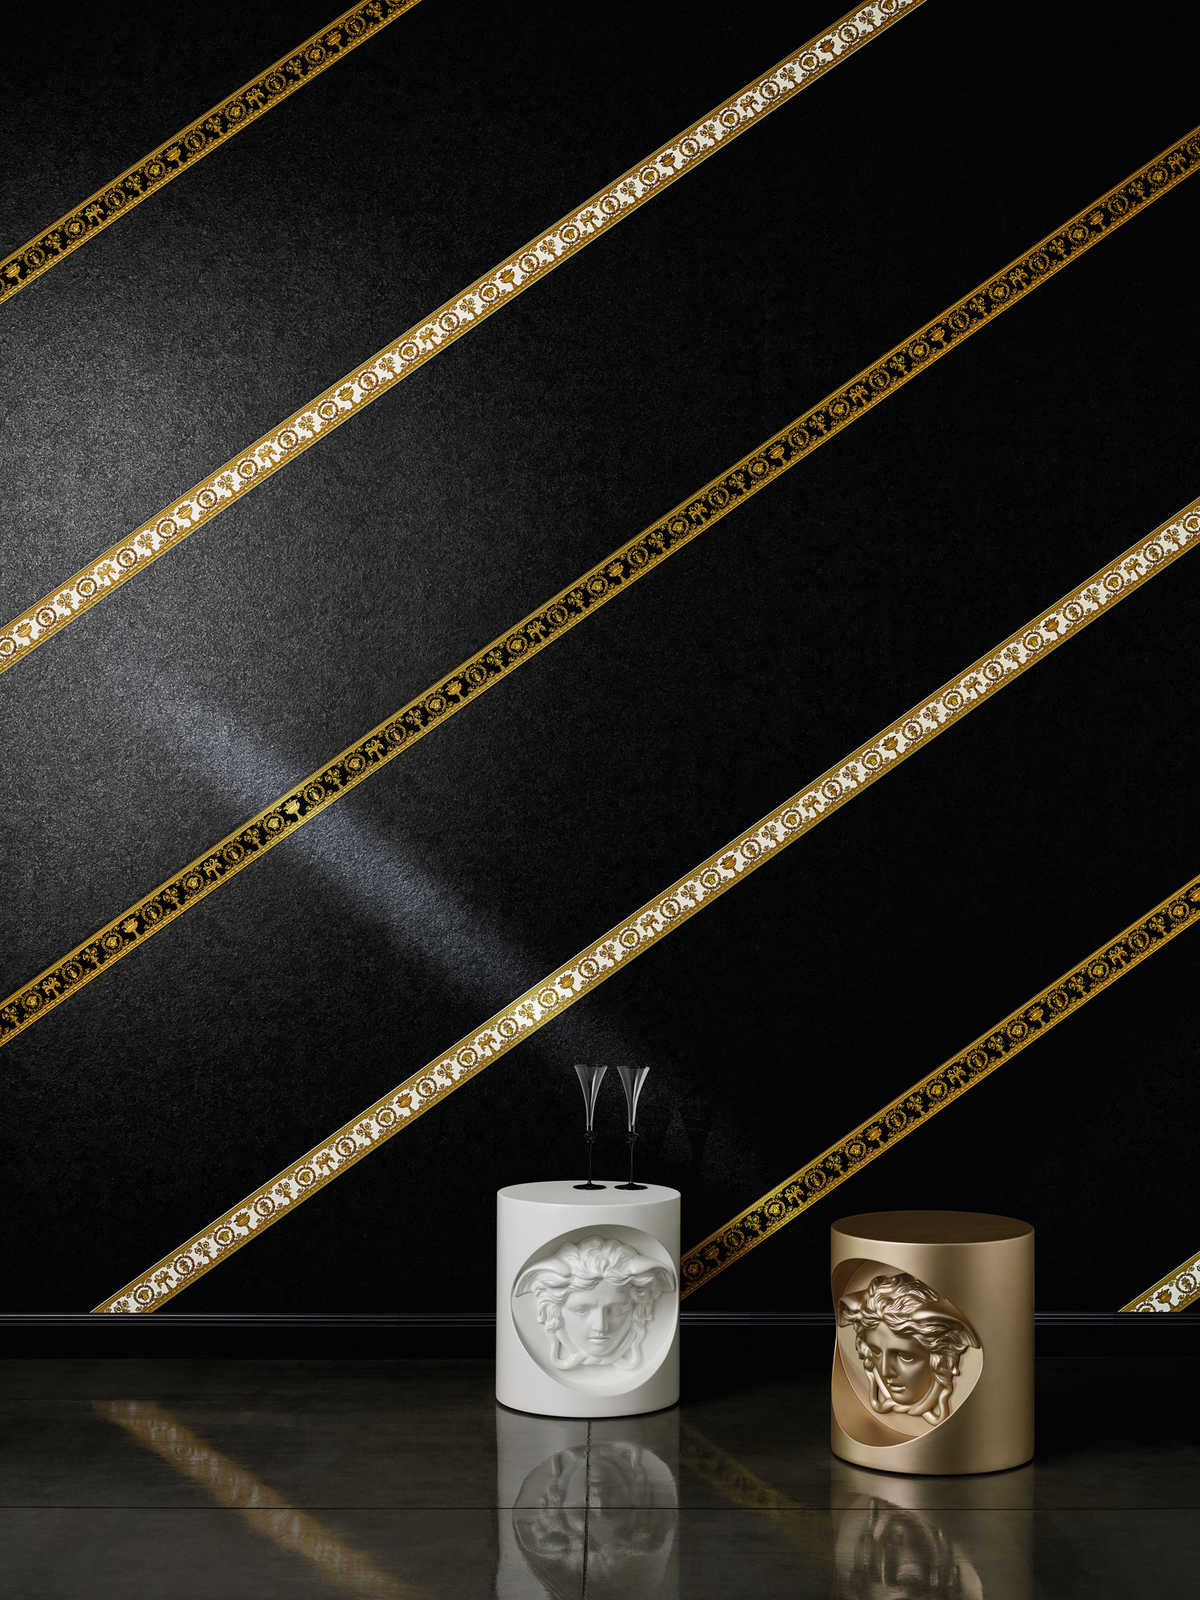             Black non-woven wallpaper plain with texture pattern
        